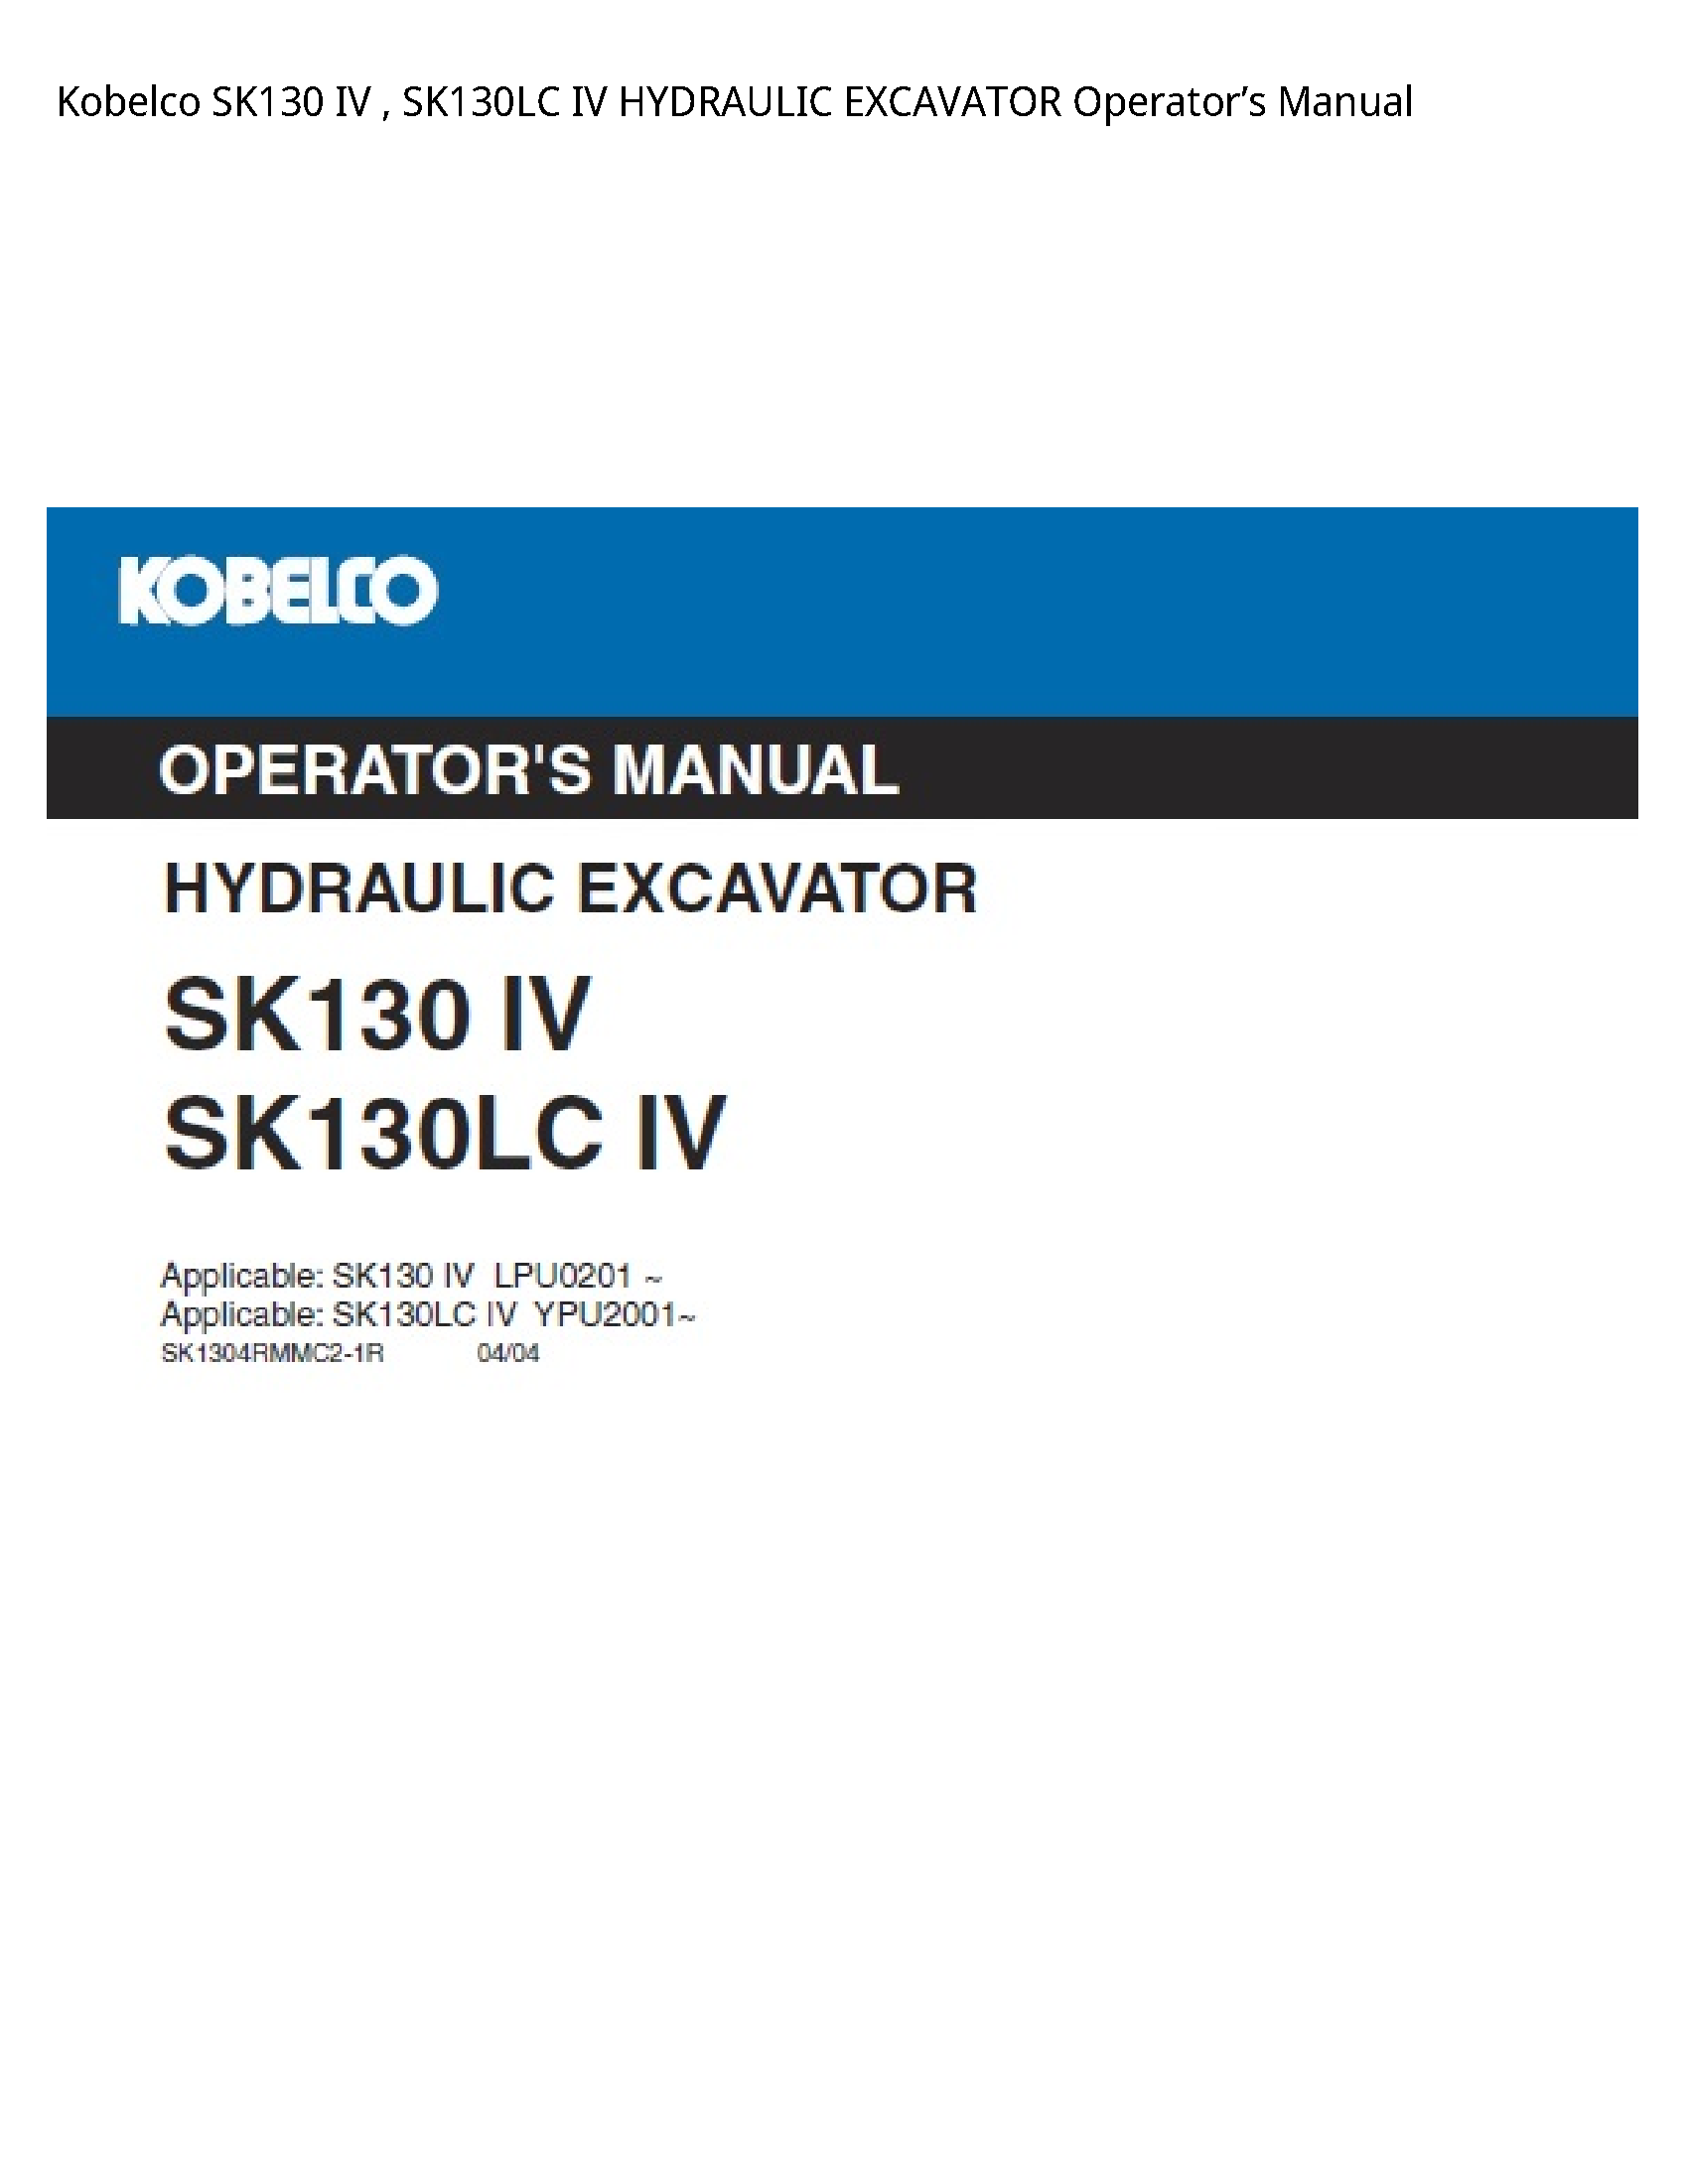 Kobelco SK130 IV IV HYDRAULIC EXCAVATOR Operator’s manual